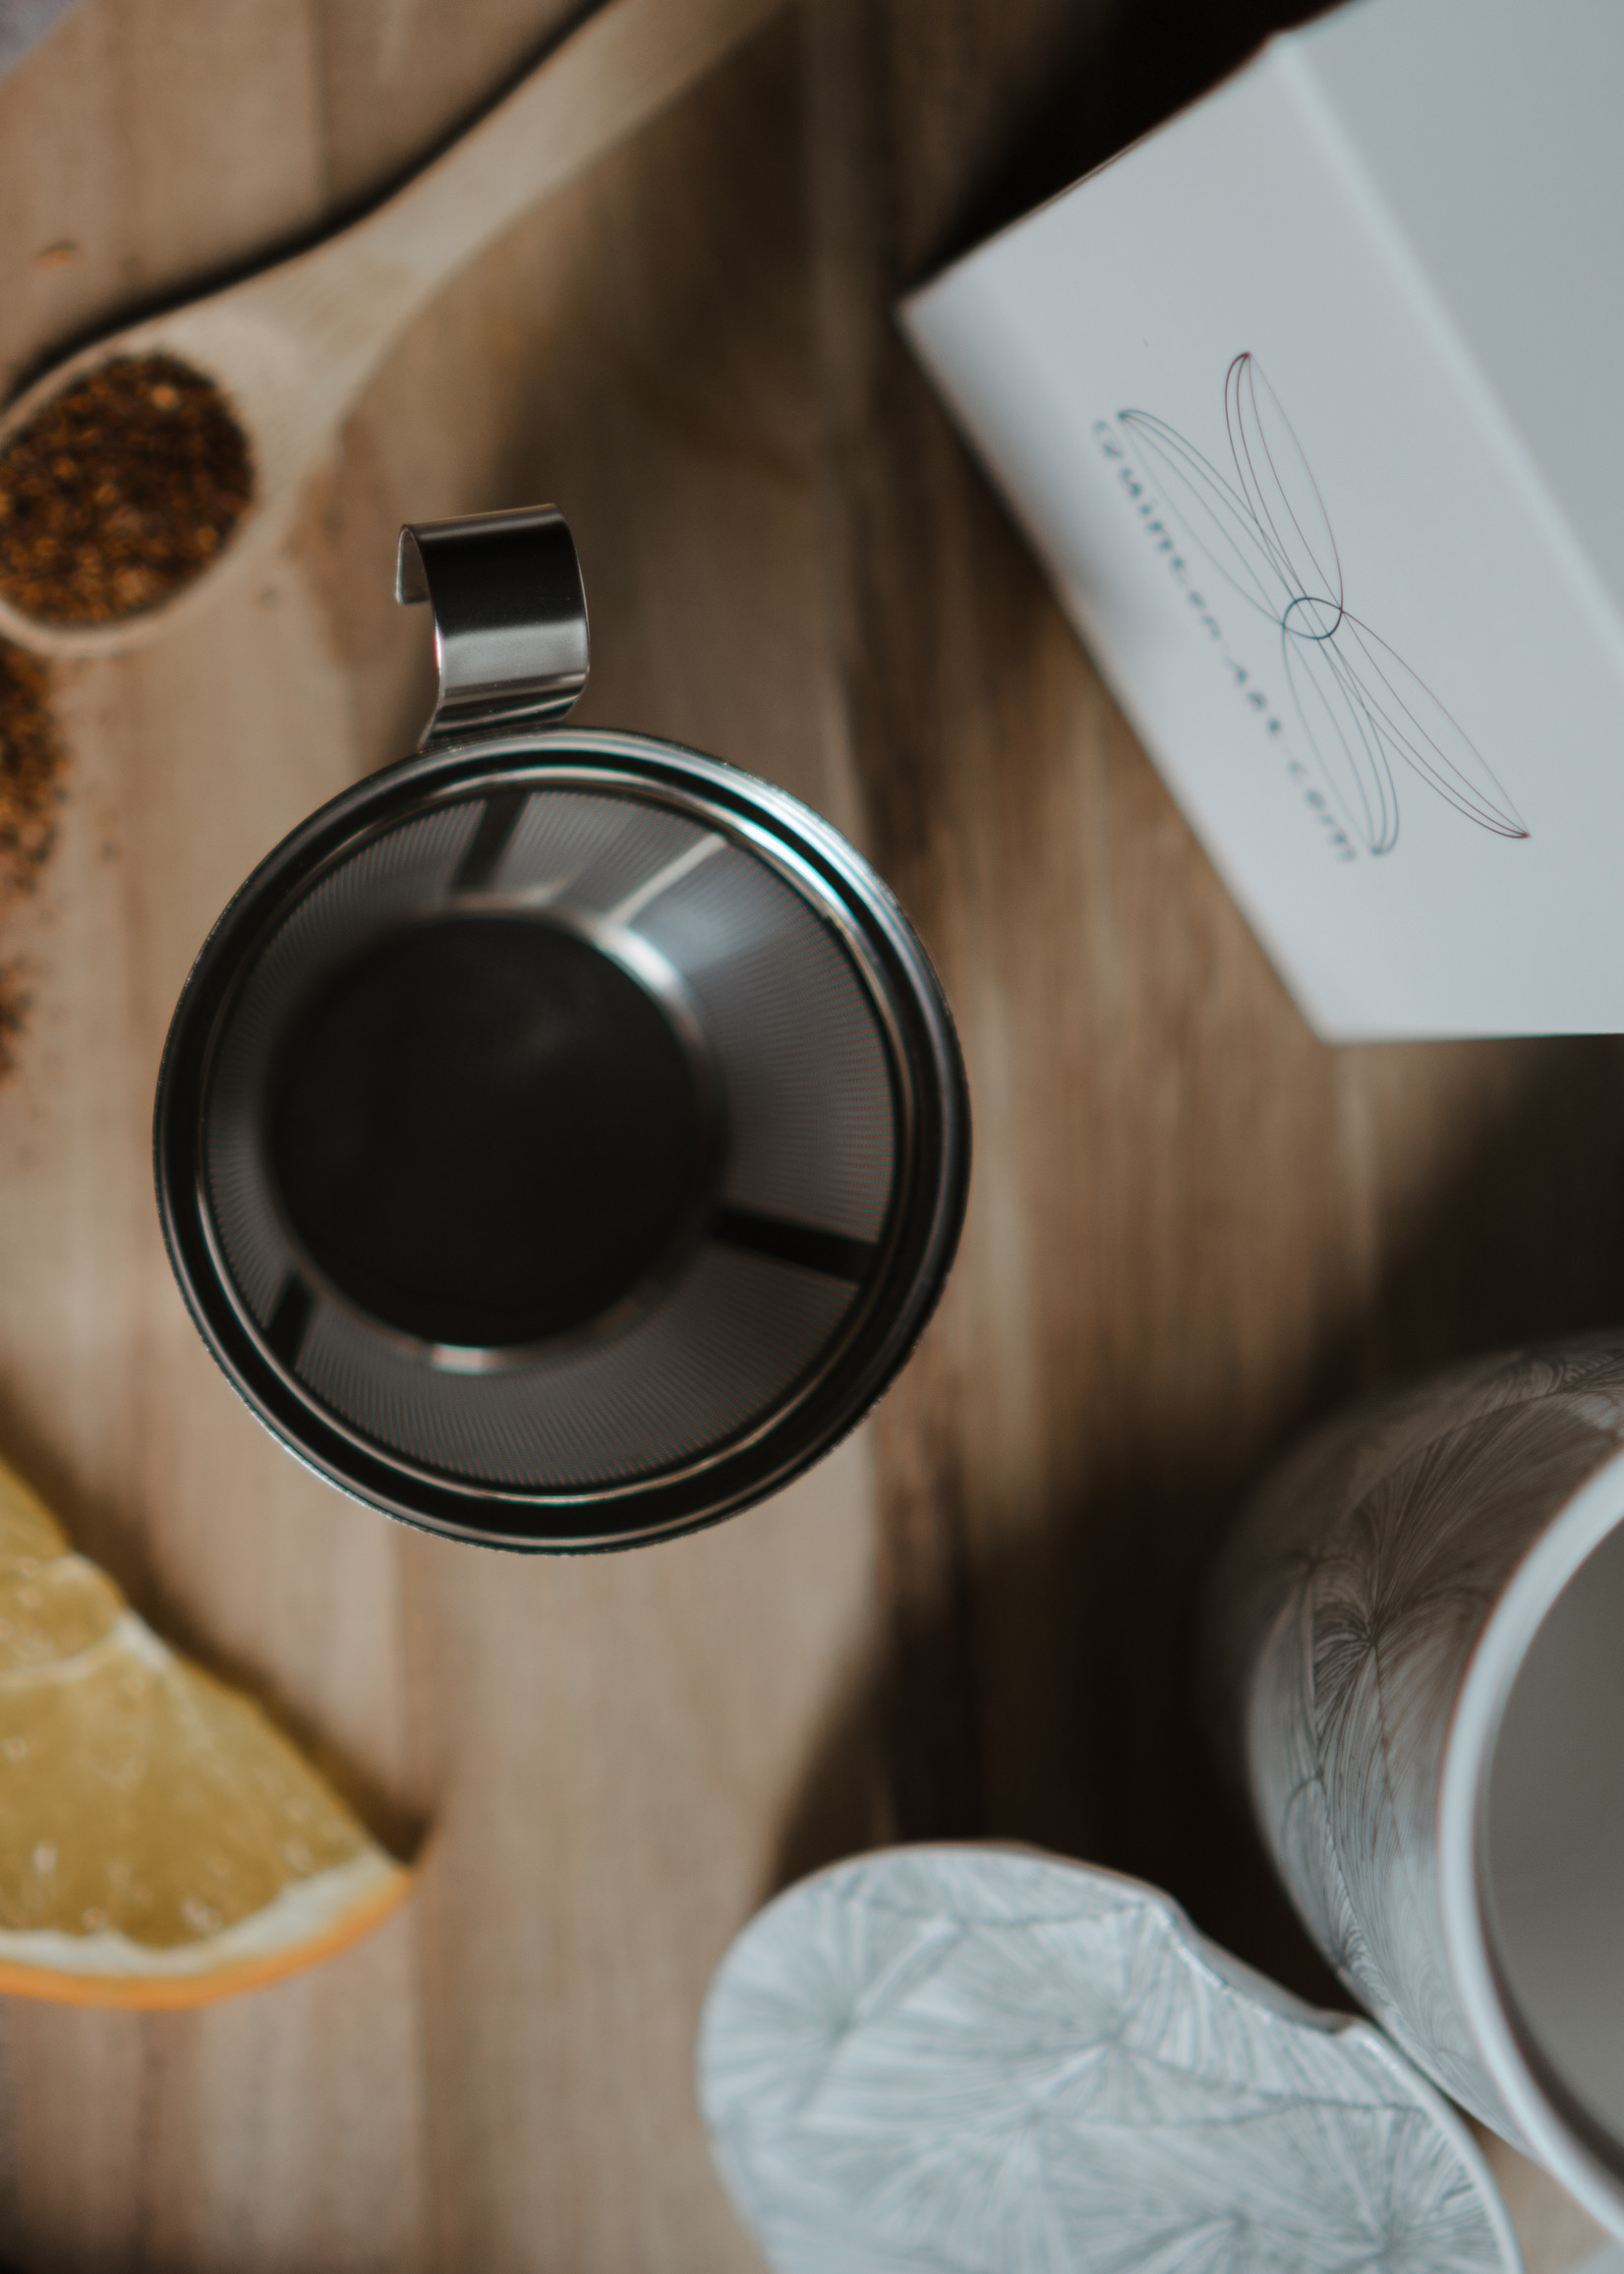 Double Wall Coffee Mug with Tea Strainer